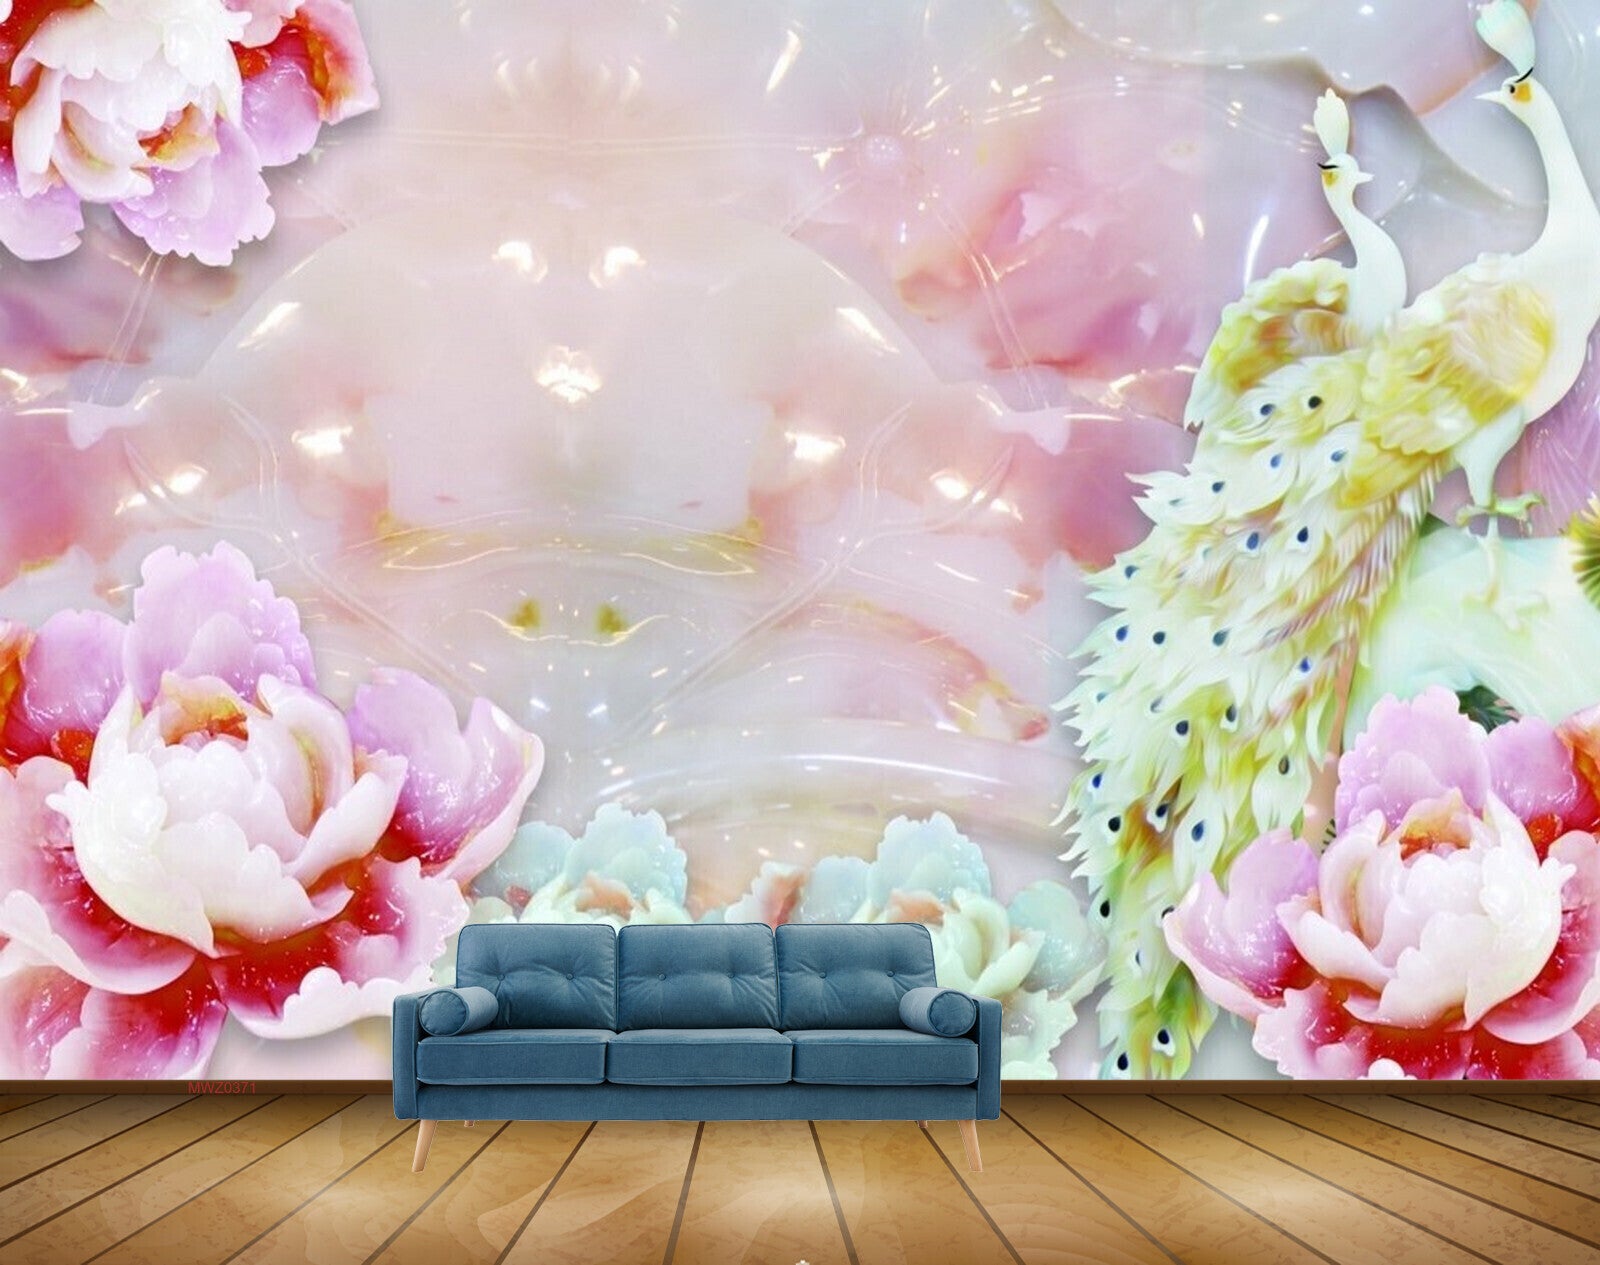 Avikalp MWZ0371 Peacocks White Pink Flowers 3D HD Wallpaper